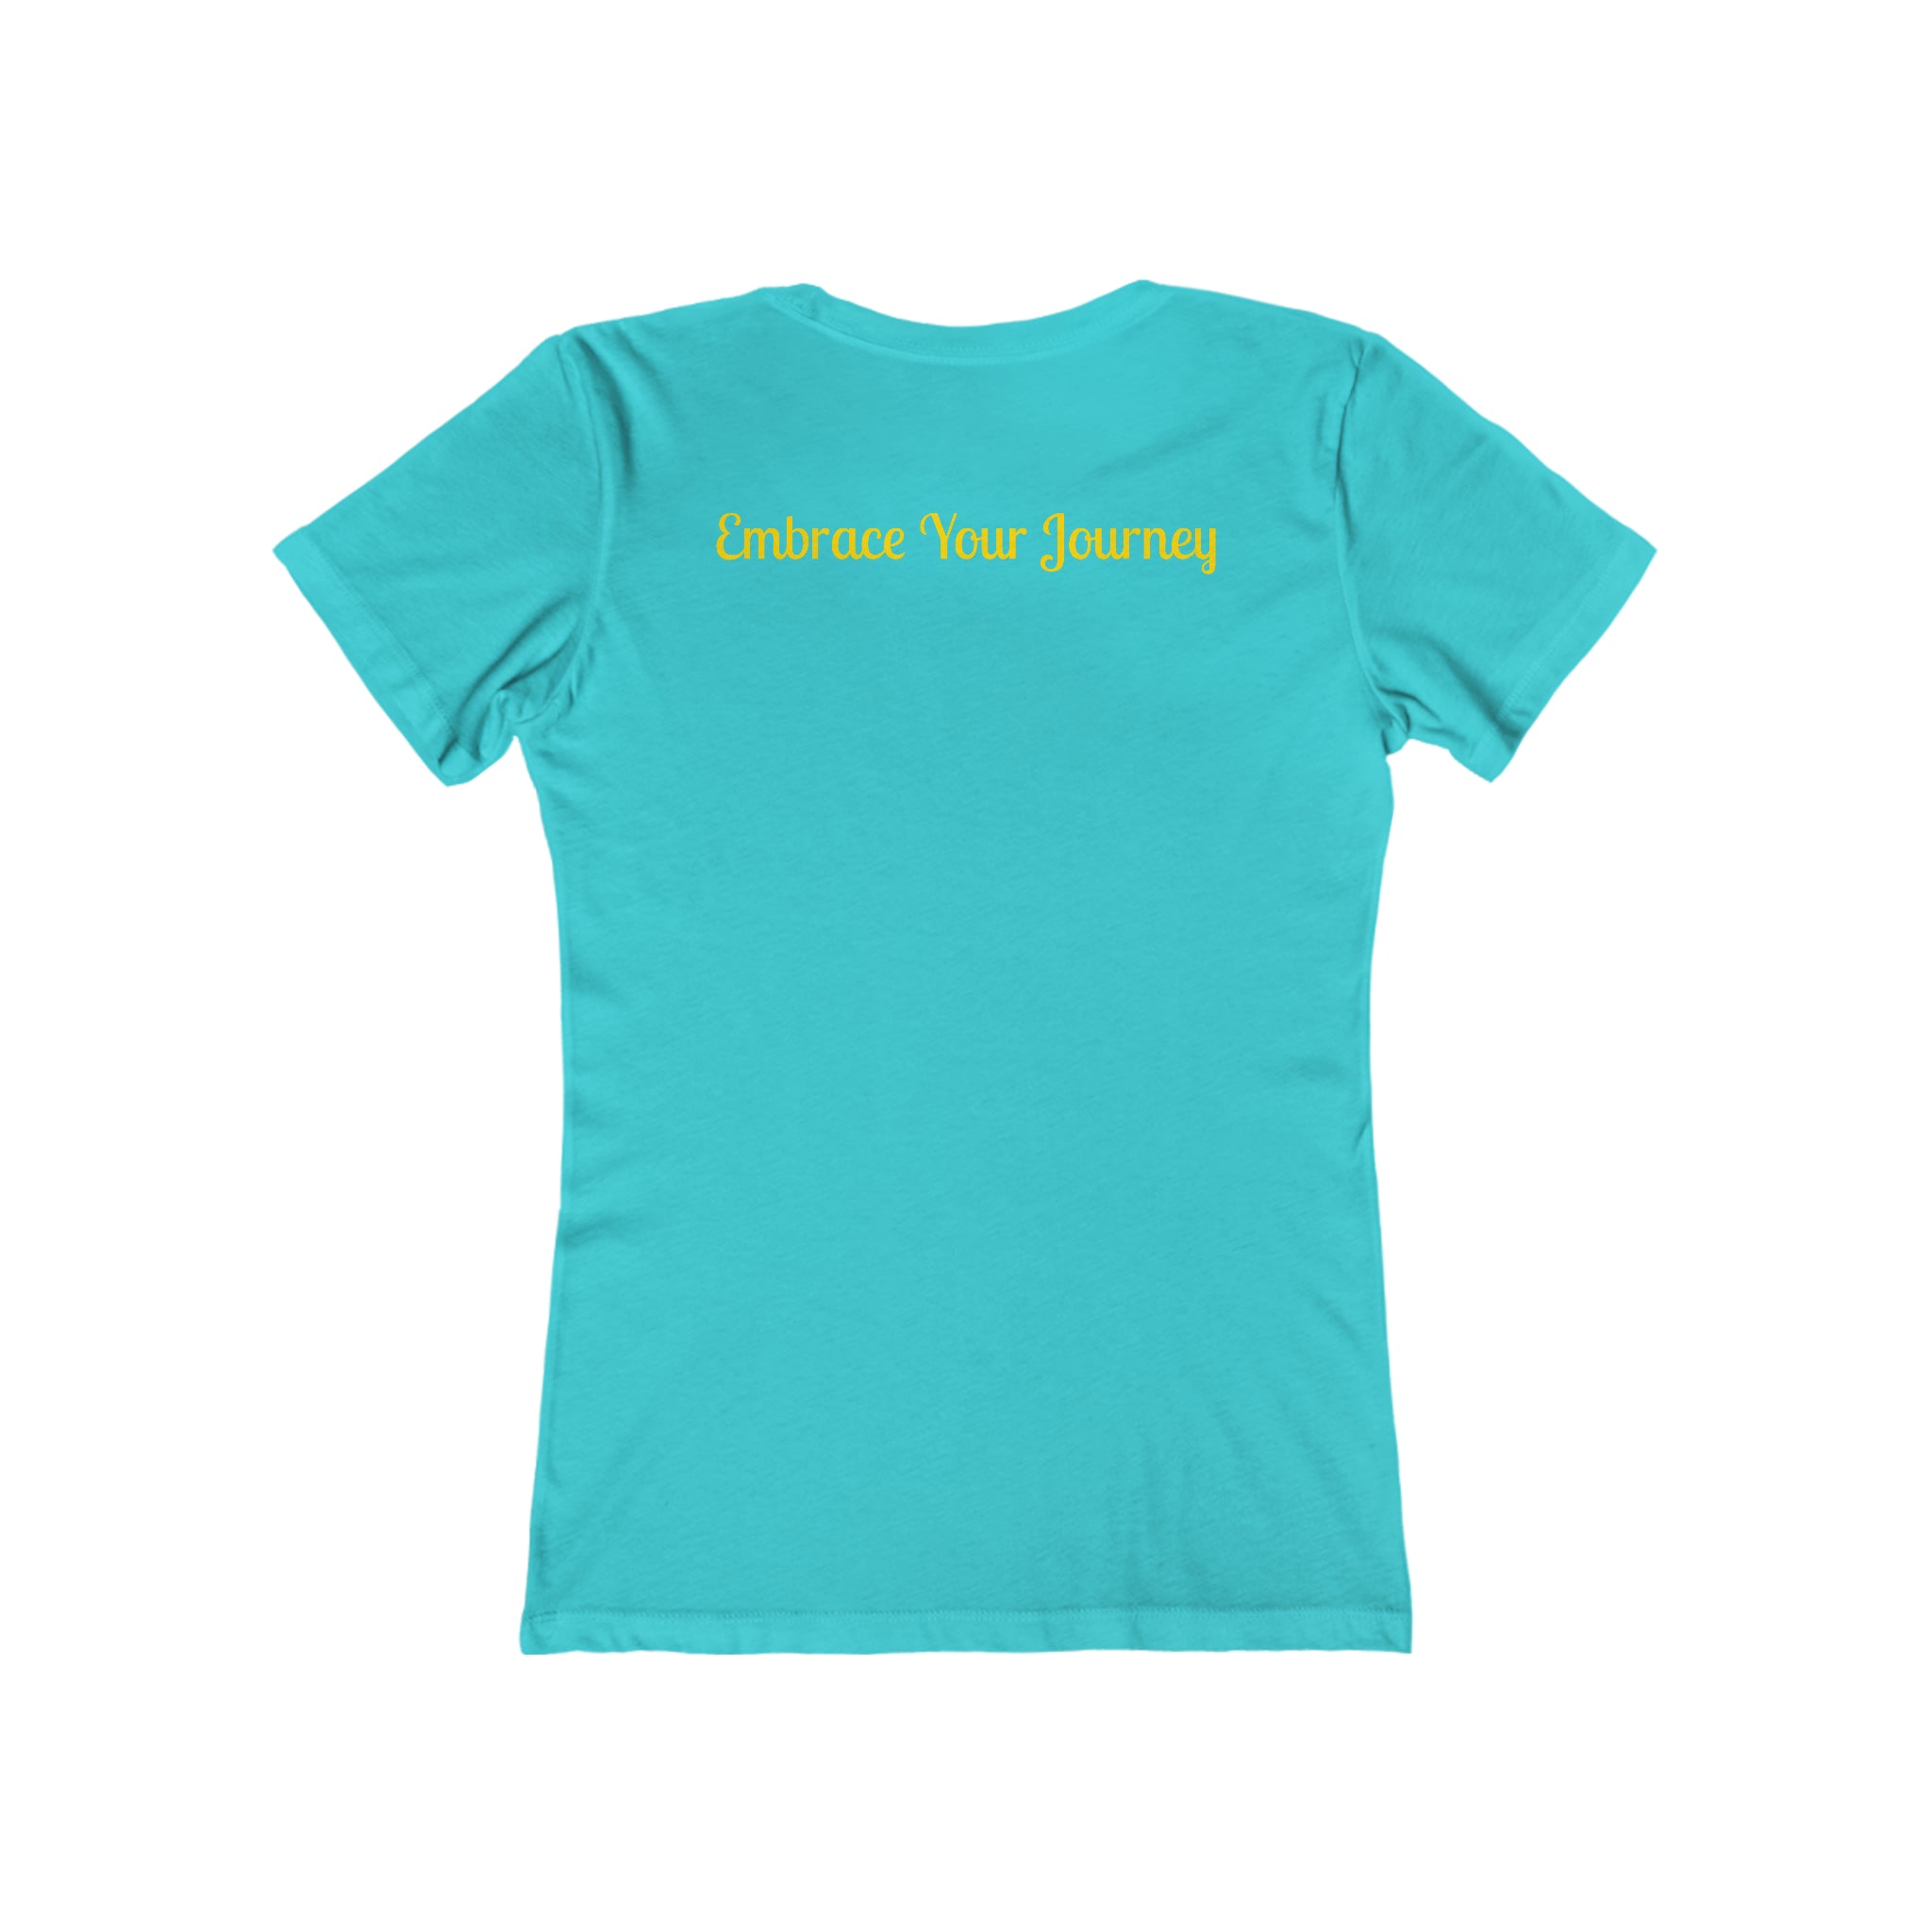 Embrace Your Journey Boyfriend Tee: Walk Confidence Solid Tahiti Blue Awareness Break the Stigma Mental Health Support Pledge Donation slim fit shirt Tee women shirt T-Shirt 5639572624438342587_2048_a58c104e-8918-4045-ad24-78c7a73f7d13 Printify